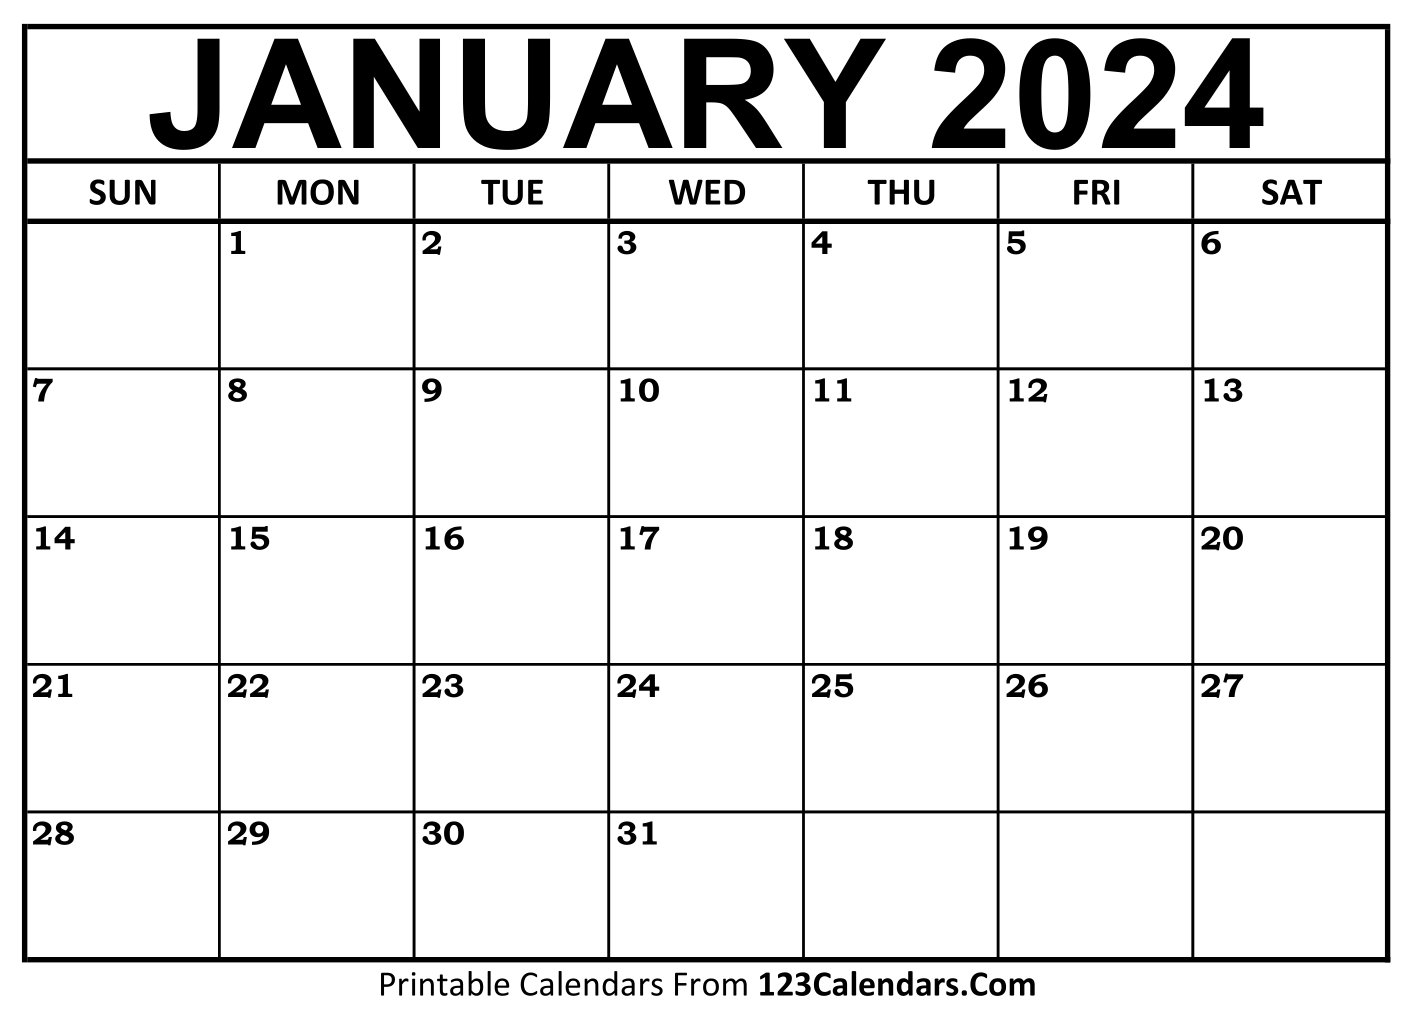 Printable January 2024 Calendar Templates - 123Calendars for January 2024 Weekly Calendar Printable